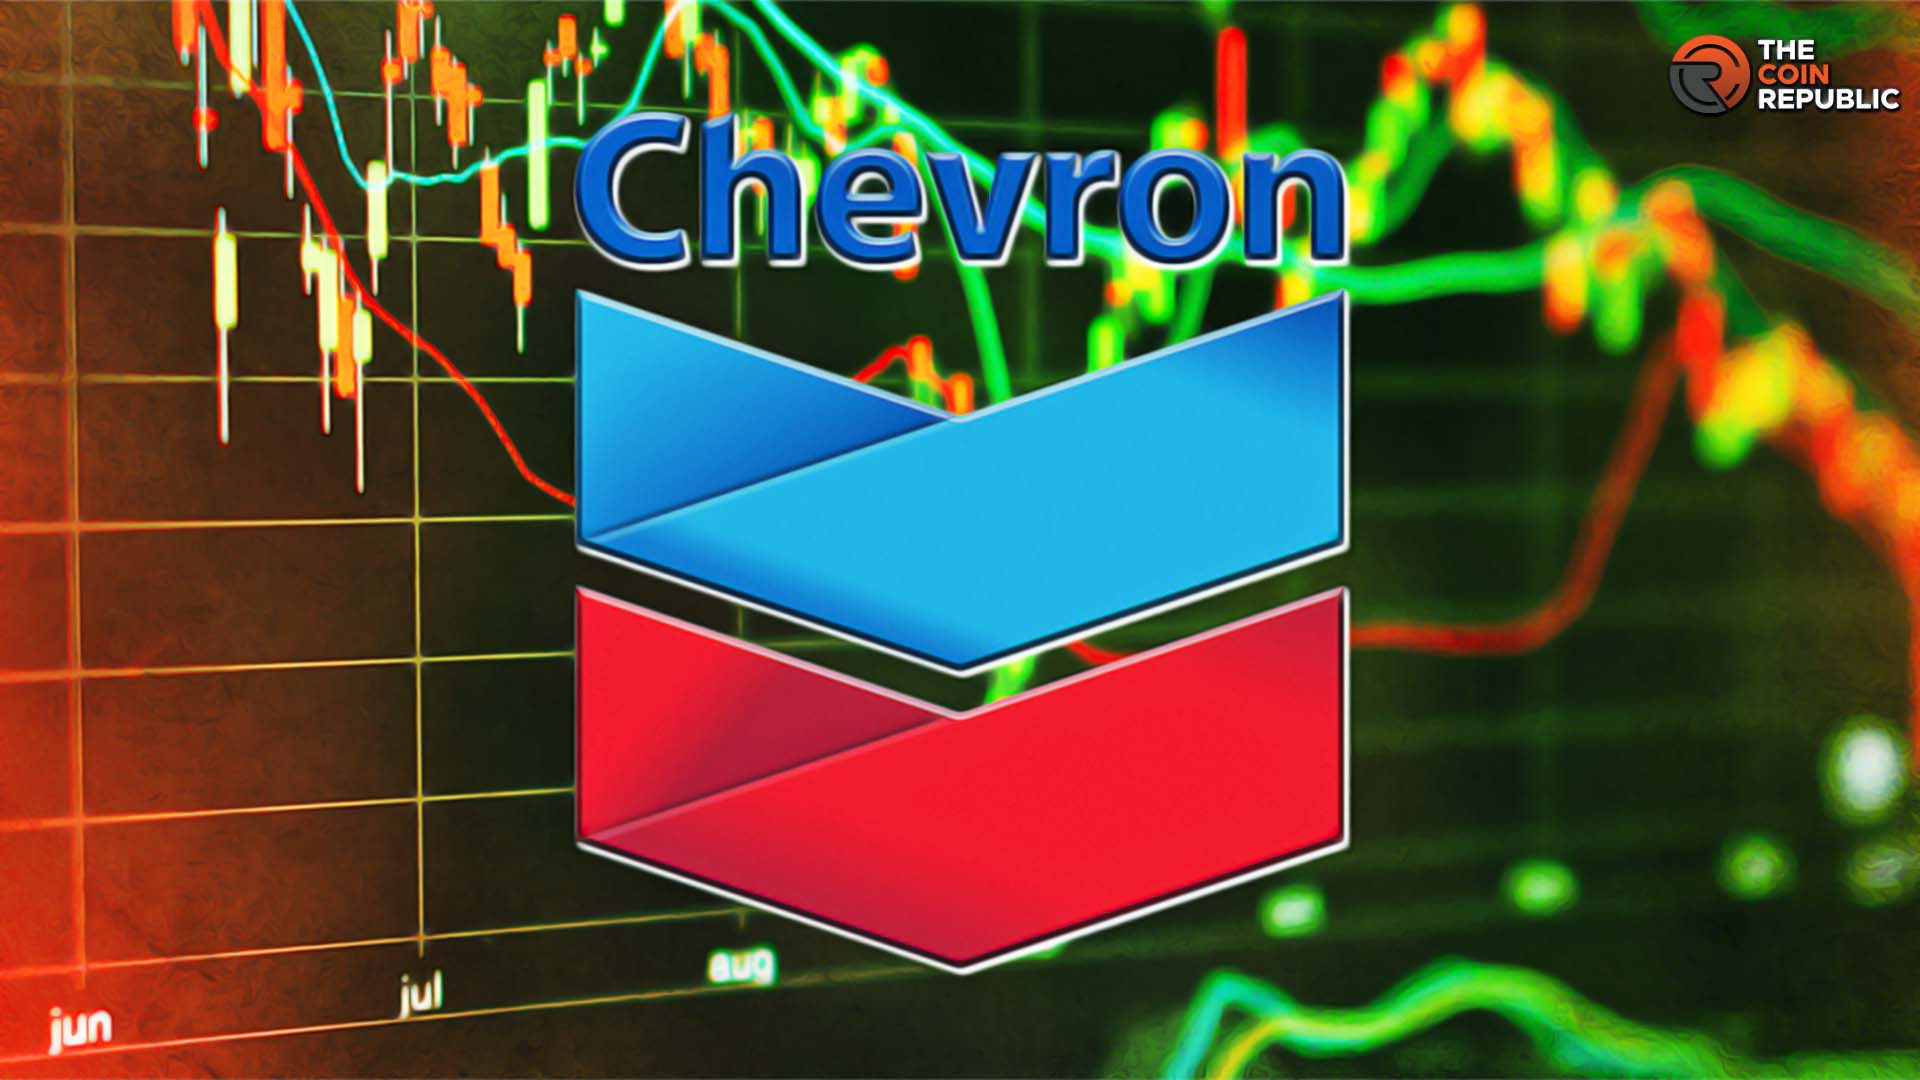 Chevron Stock Price Analysis: CVX Stock Price Roadmap to $180